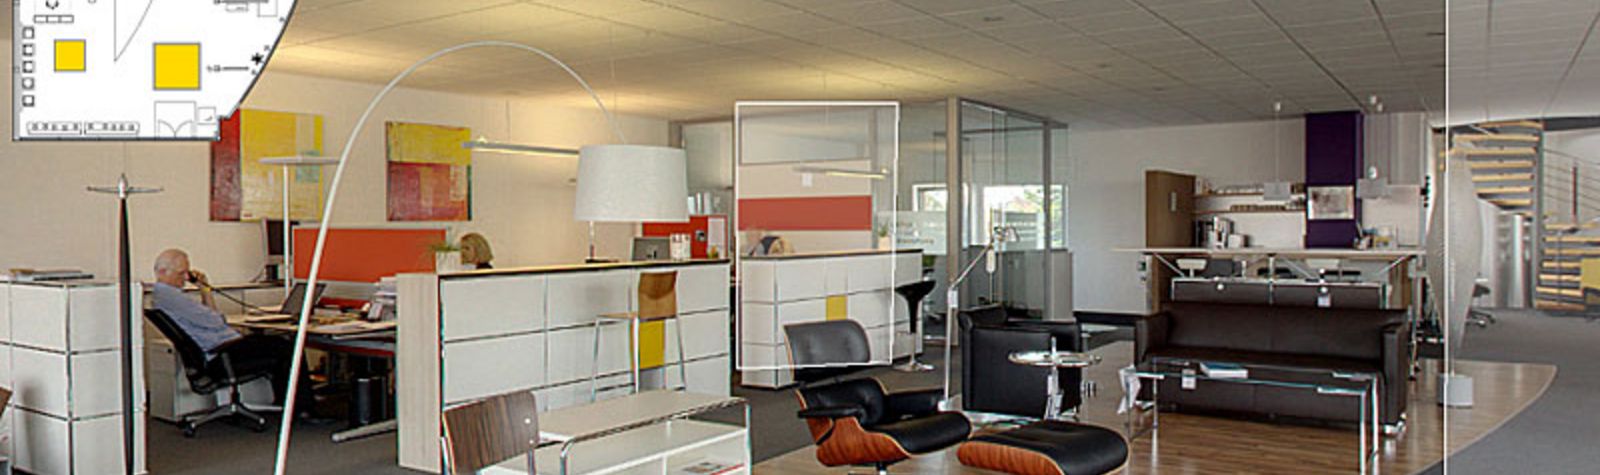 PanoramaTour pro office Lemgo